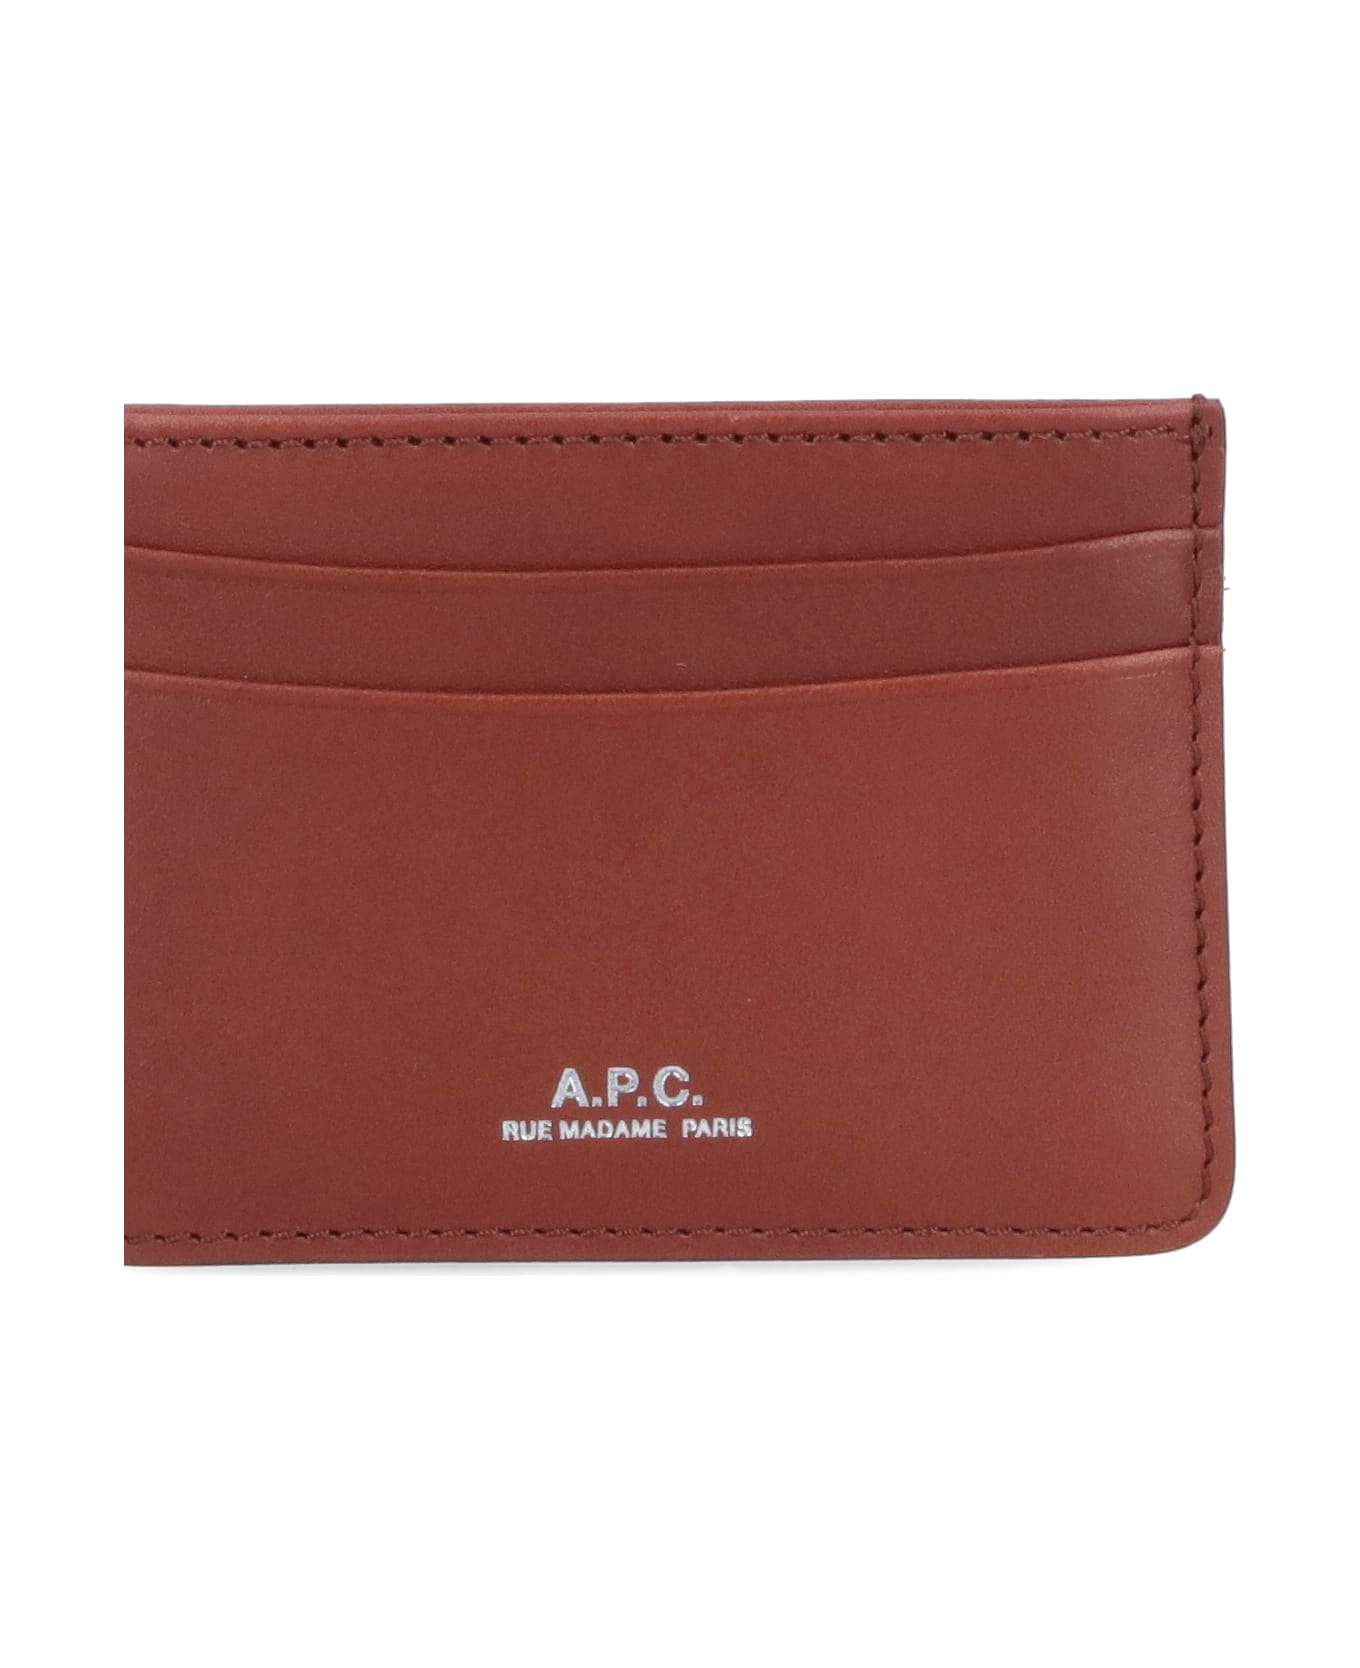 A.P.C. Card Case - Brown 財布